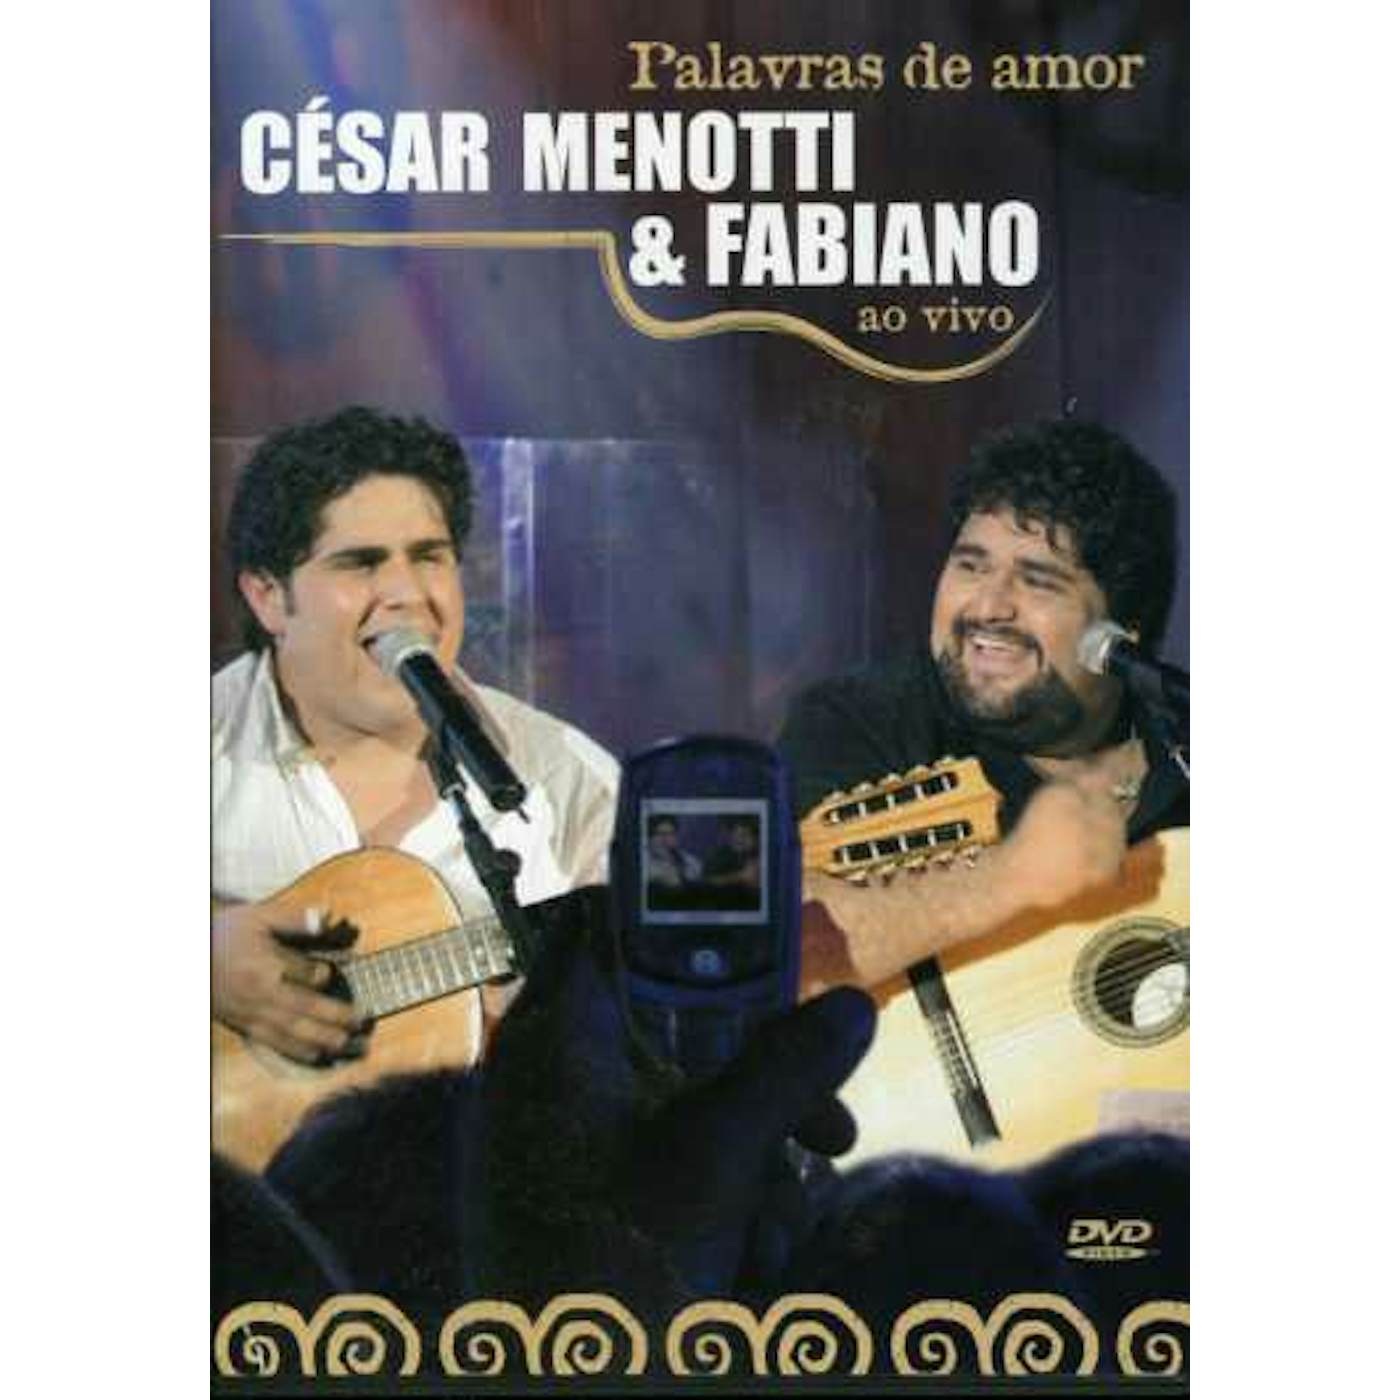 César Menotti & Fabiano PALAVRAS DE AMOR LIVE DVD